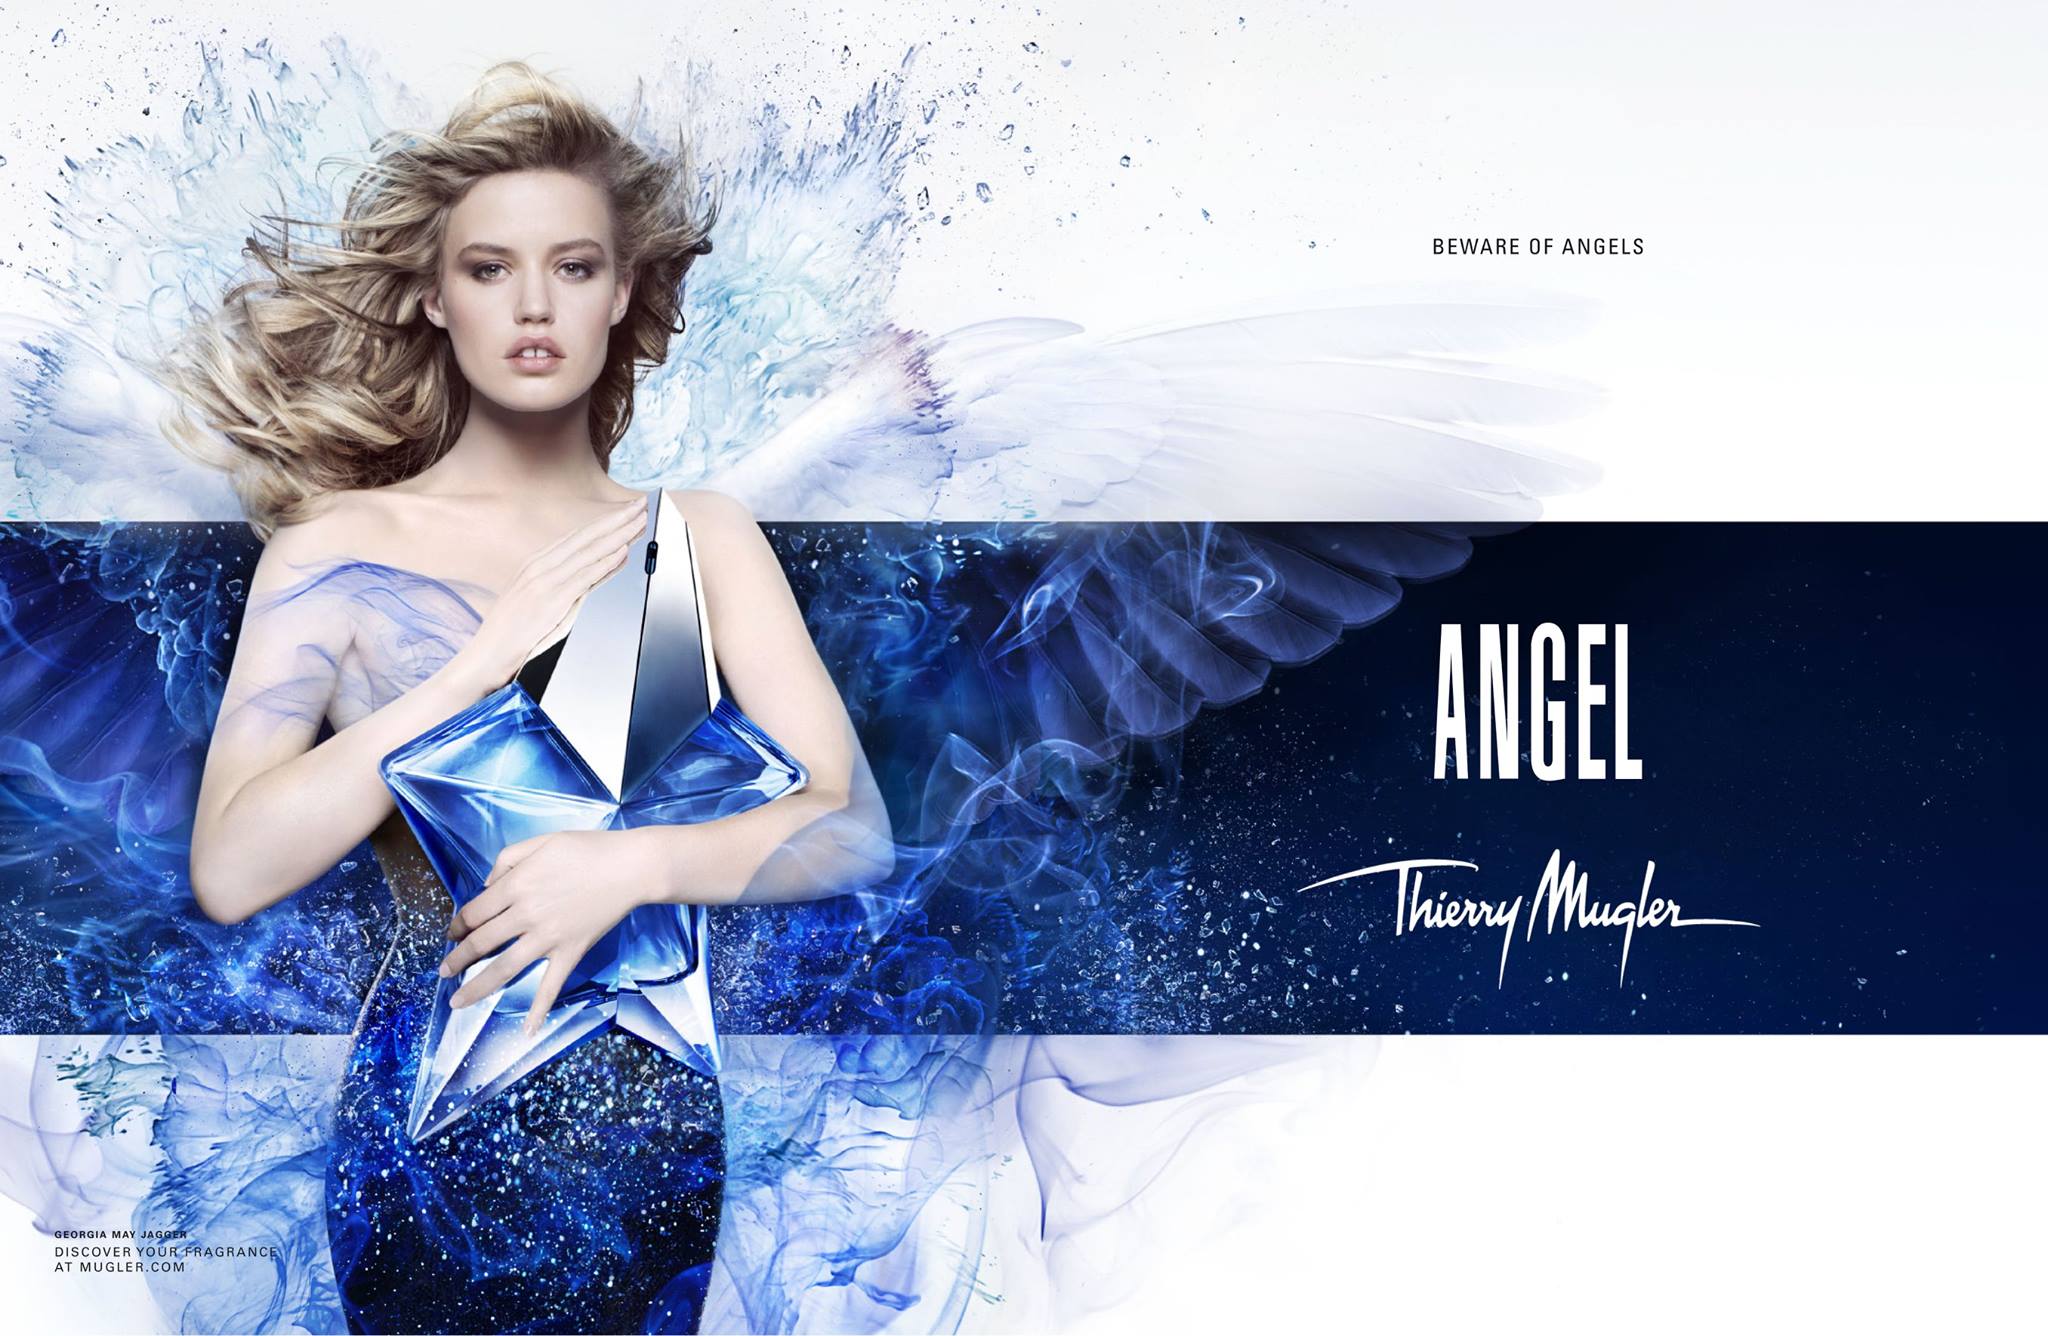 thierry-muglers-perfume-angel-perfume-angel-print-361902-adeevee.jpg